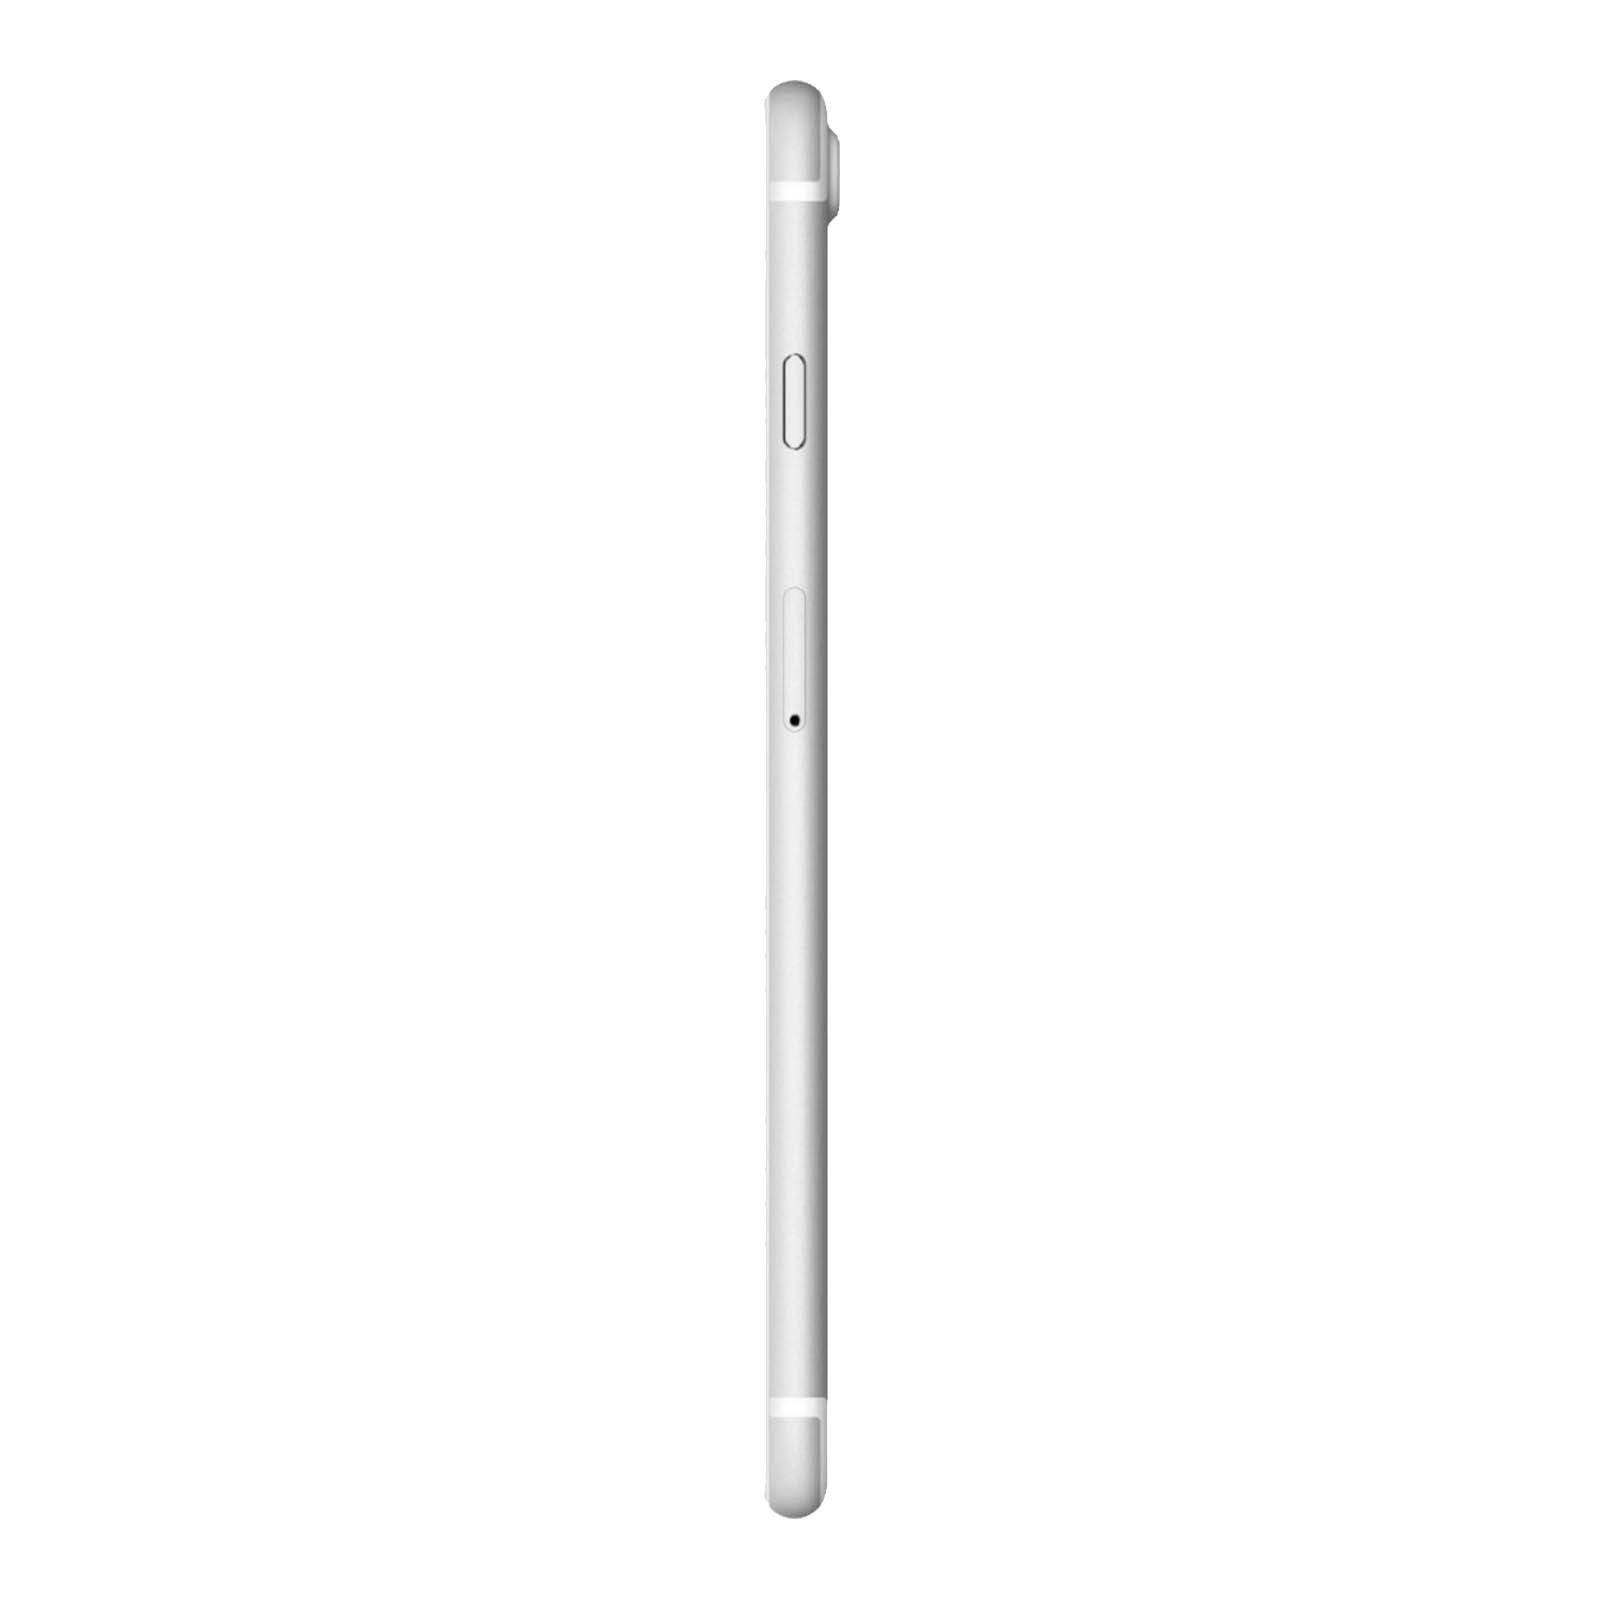 Apple iPhone 7 Plus 256GB Silver Good - Unlocked